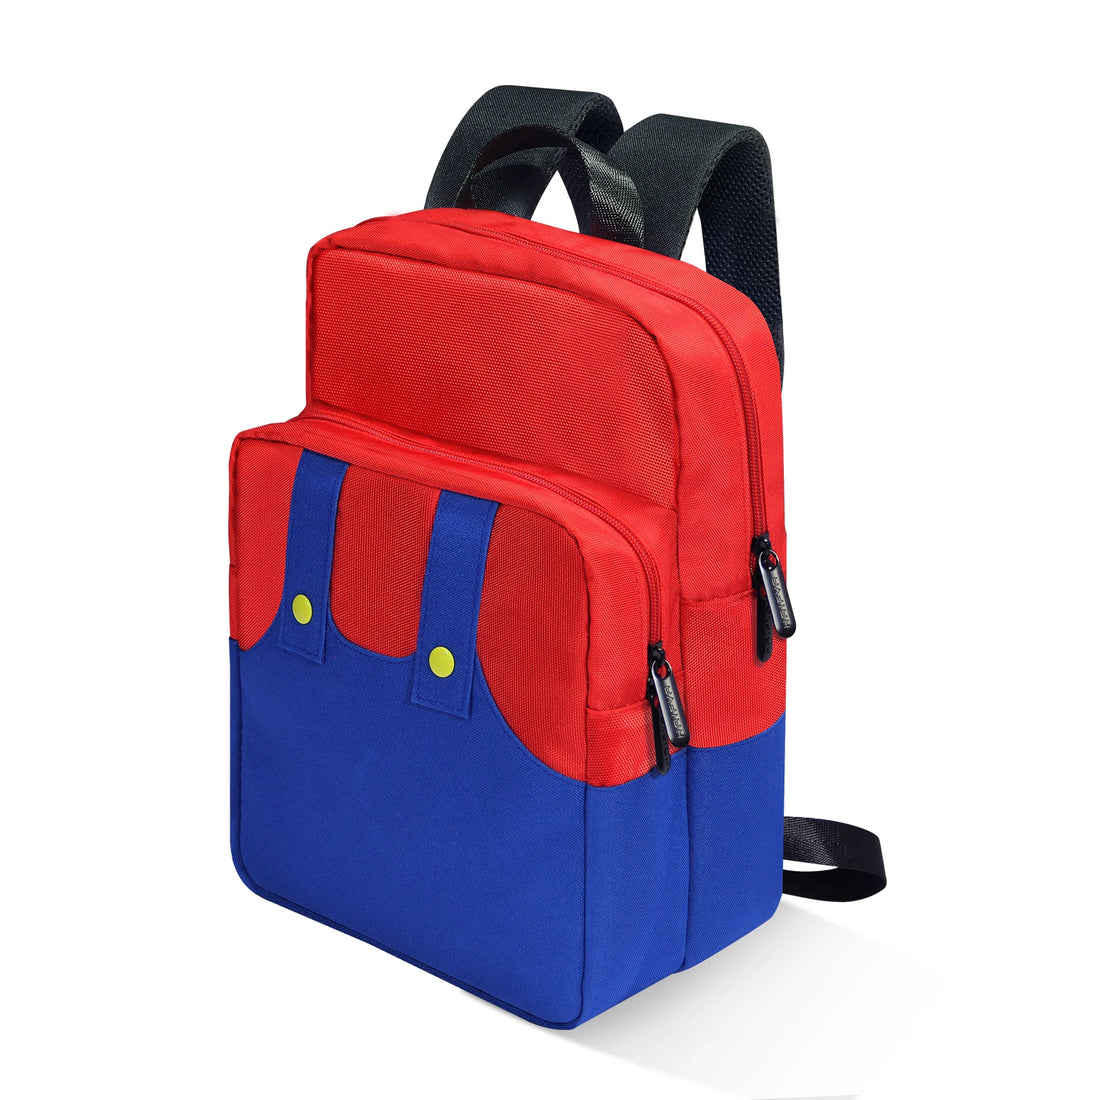 Mario Stylish Backpack Travel Bag for Nintendo Switch